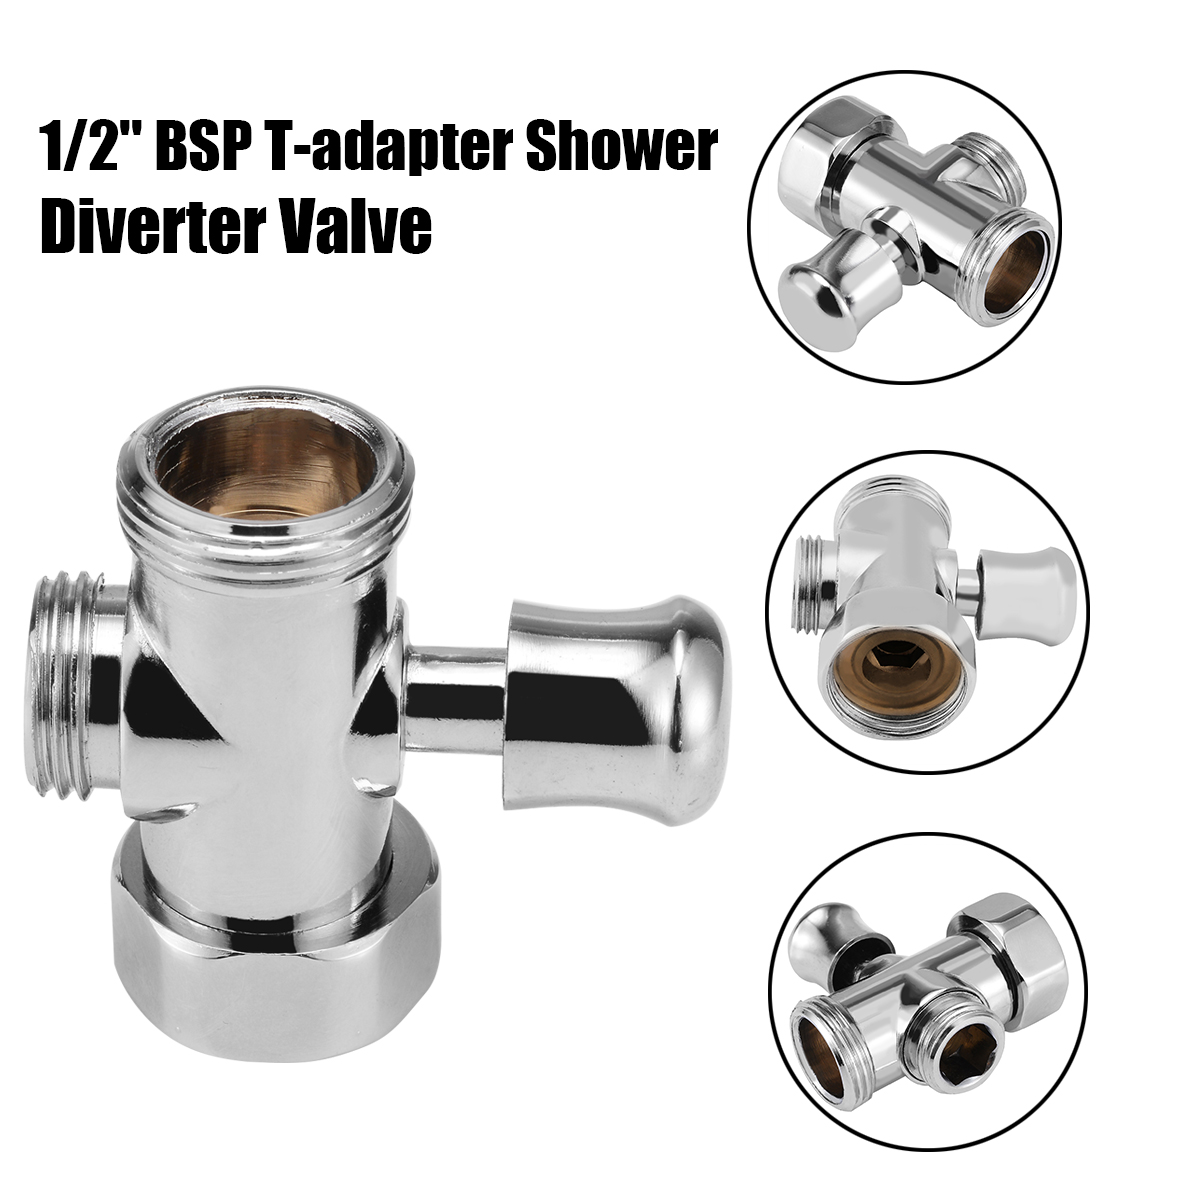 Buy Online 3 Way Shower Diverter Valve Bathroom Toilet Bidet 3 4 And 1 2 Bsp Connections T Adapter Shower Head Sprinkler Water Shunt Alitools